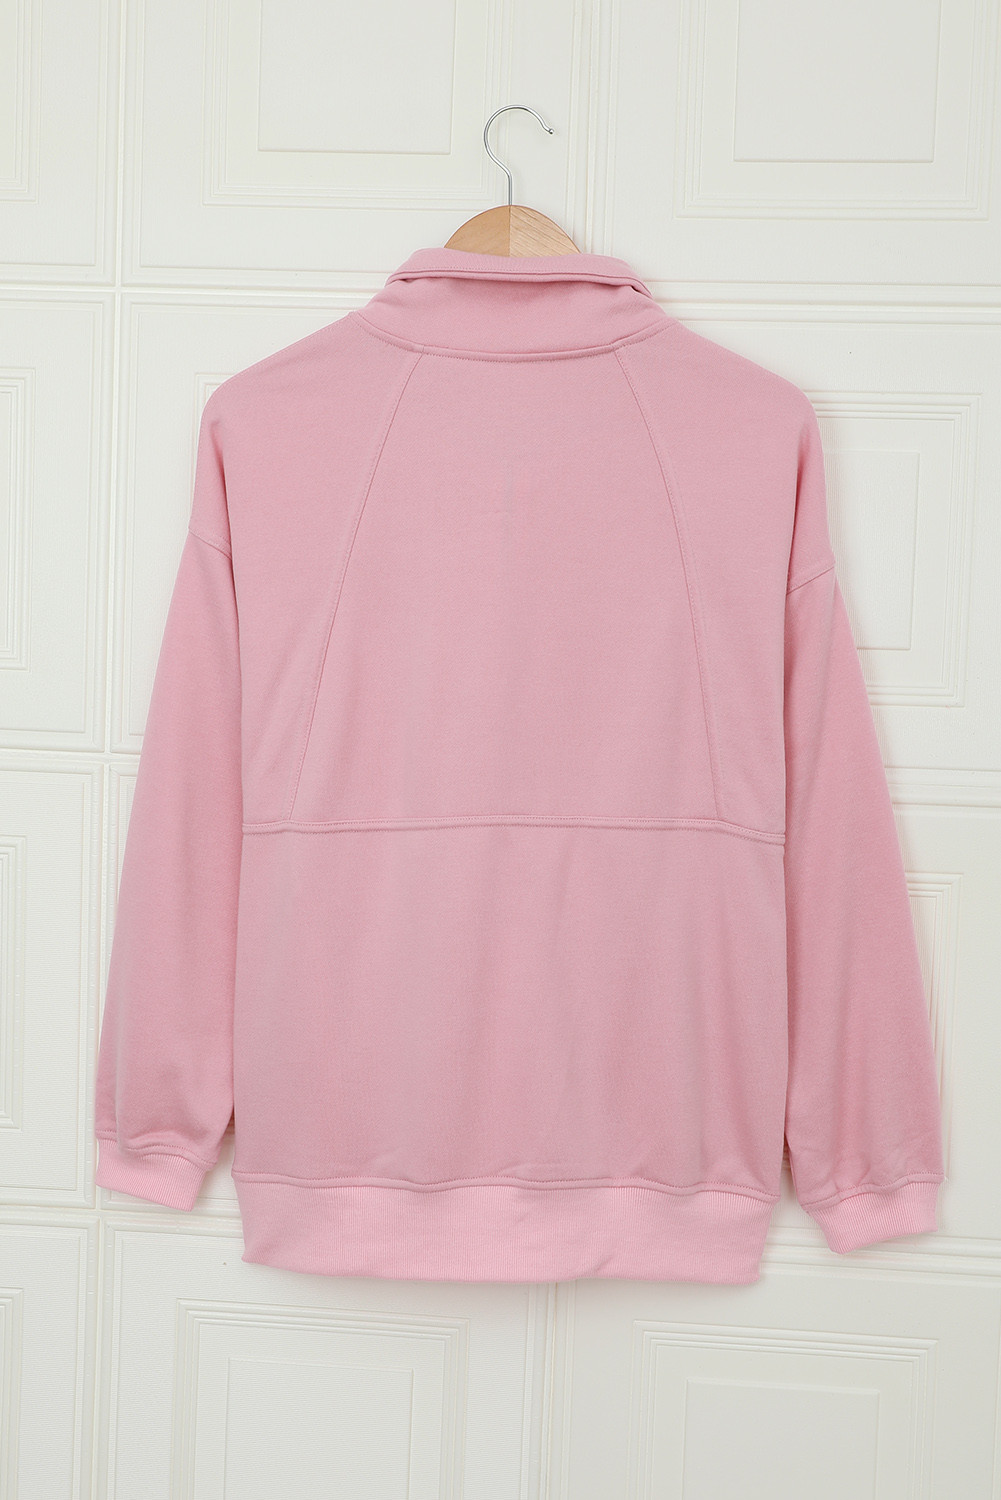 US$10.98 Cotton Pocketed Half Zip Pullover Pink Sweatshirt Wholesale Online